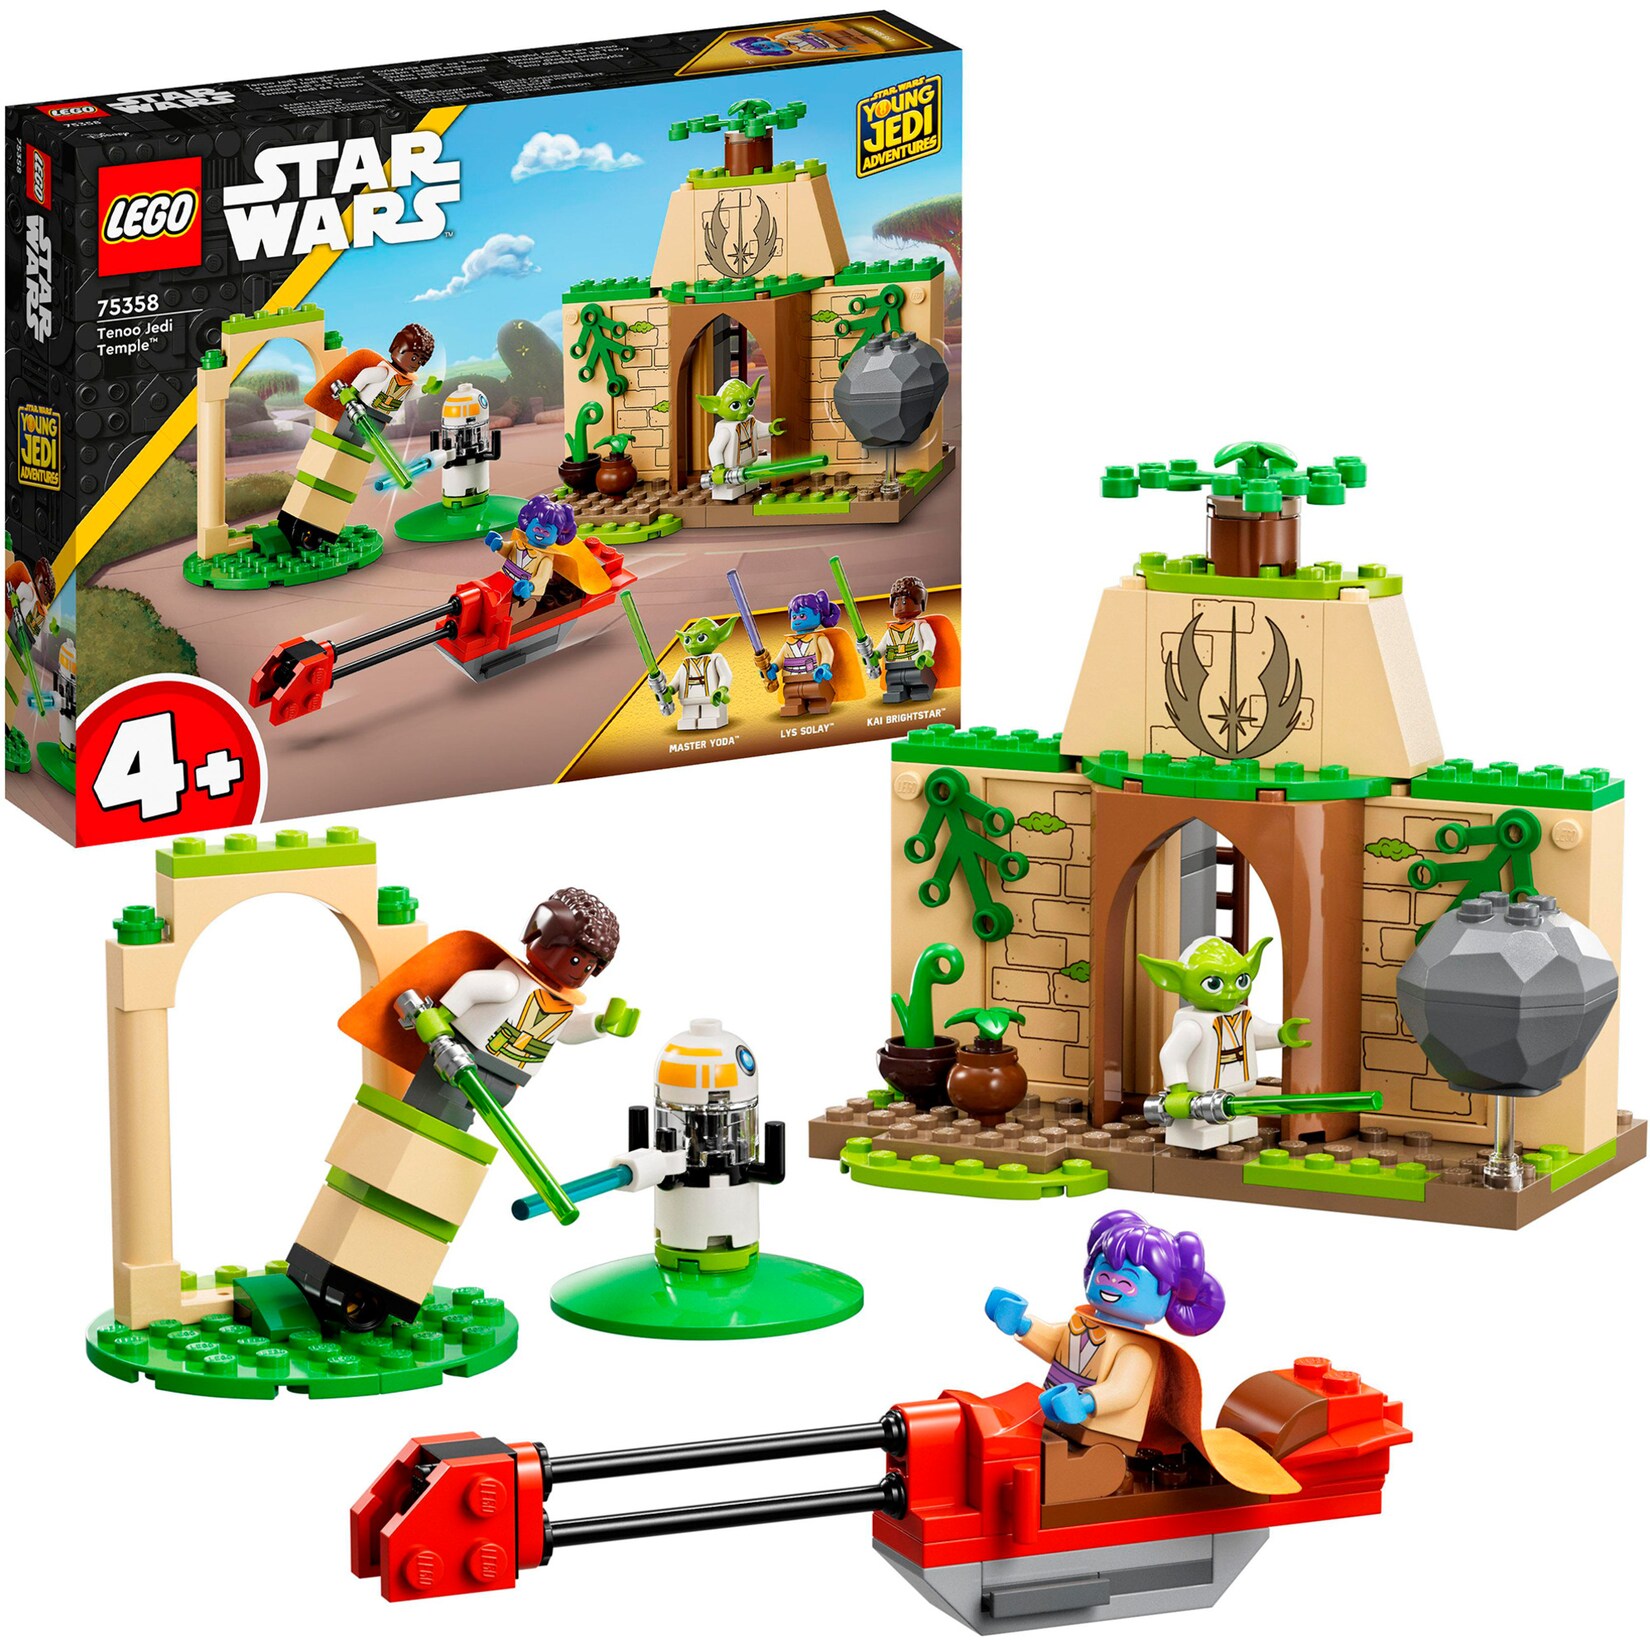 LEGO Konstruktionsspielzeug Star Wars Tenno Jedi Temple